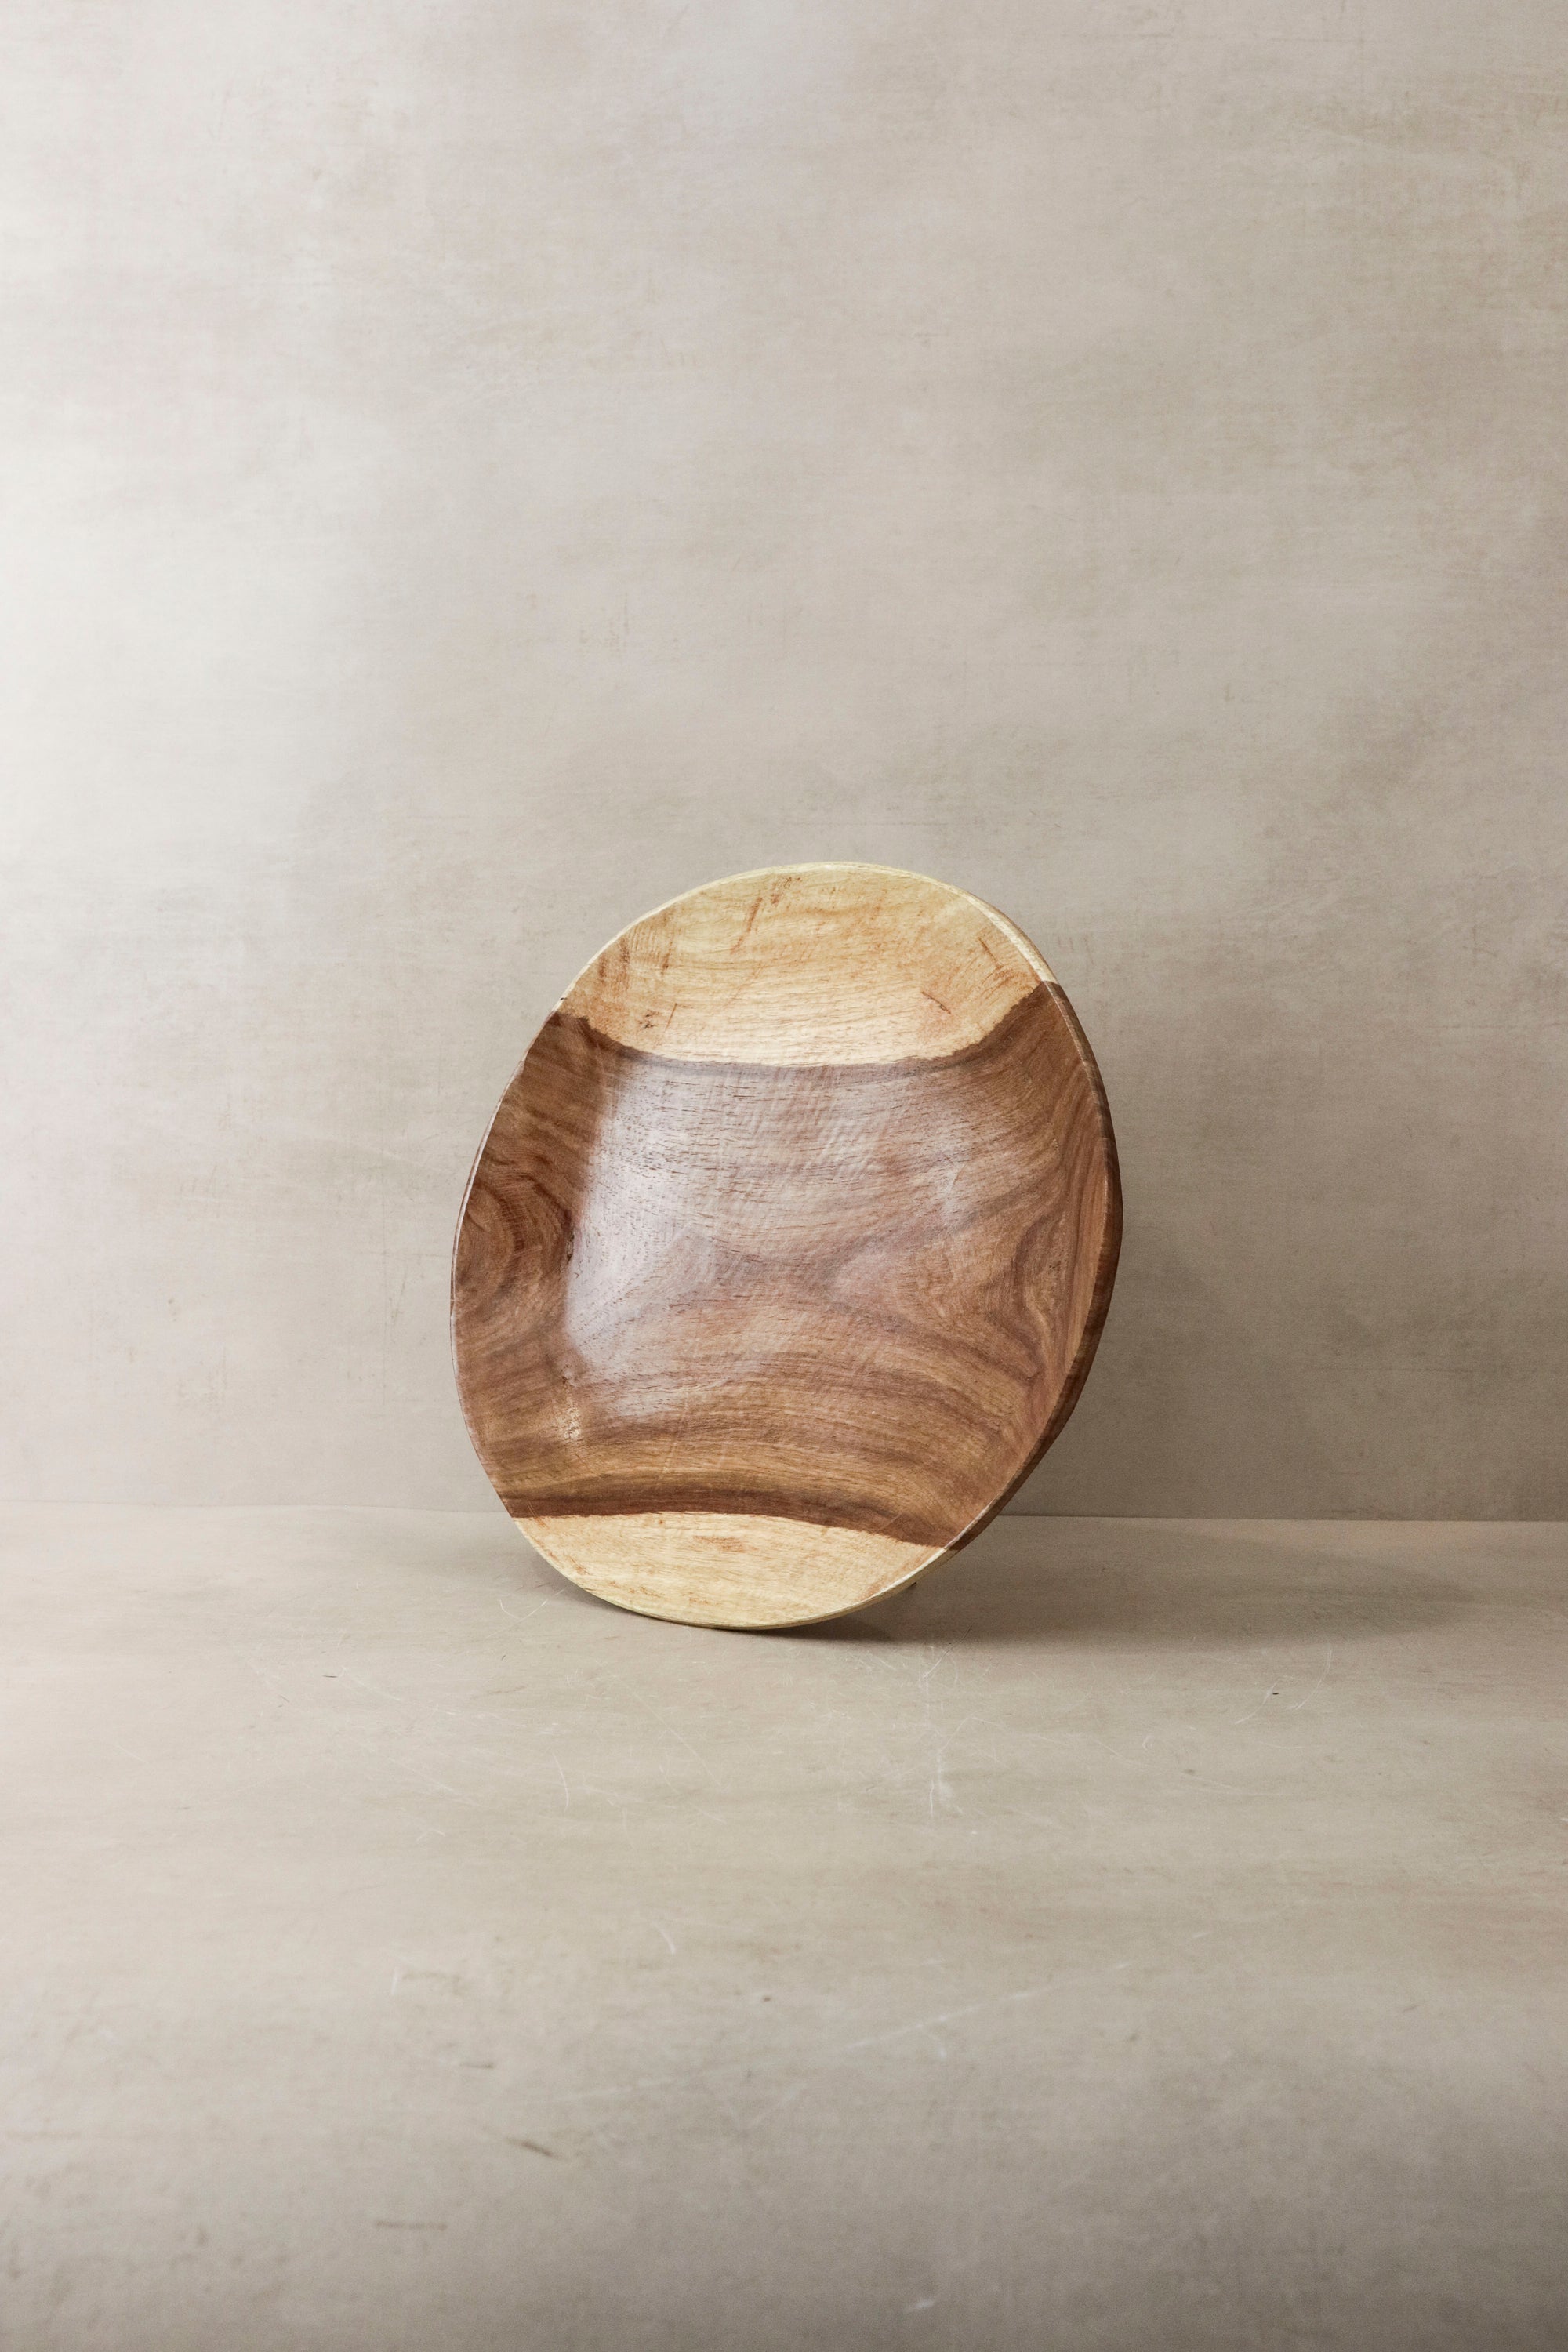 Handmade wooden bowl, Zimbabwe - 13.4